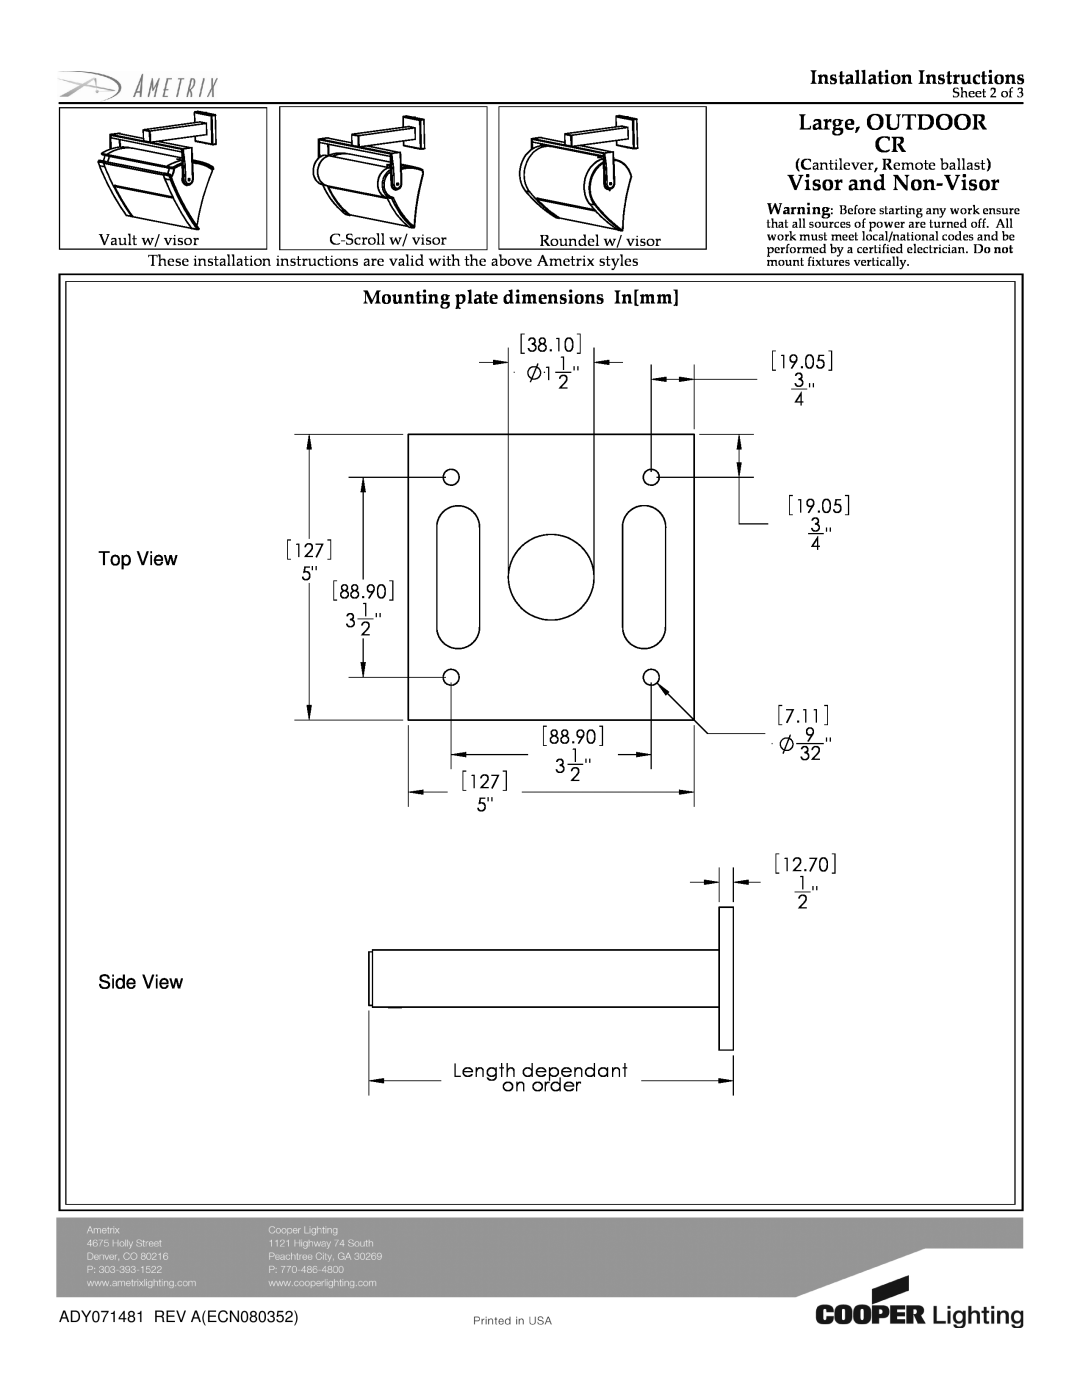 Cooper Lighting ADY071481 installation instructions Large, OUTDOOR CR, Visor and Non-Visor, Installation Instructions 